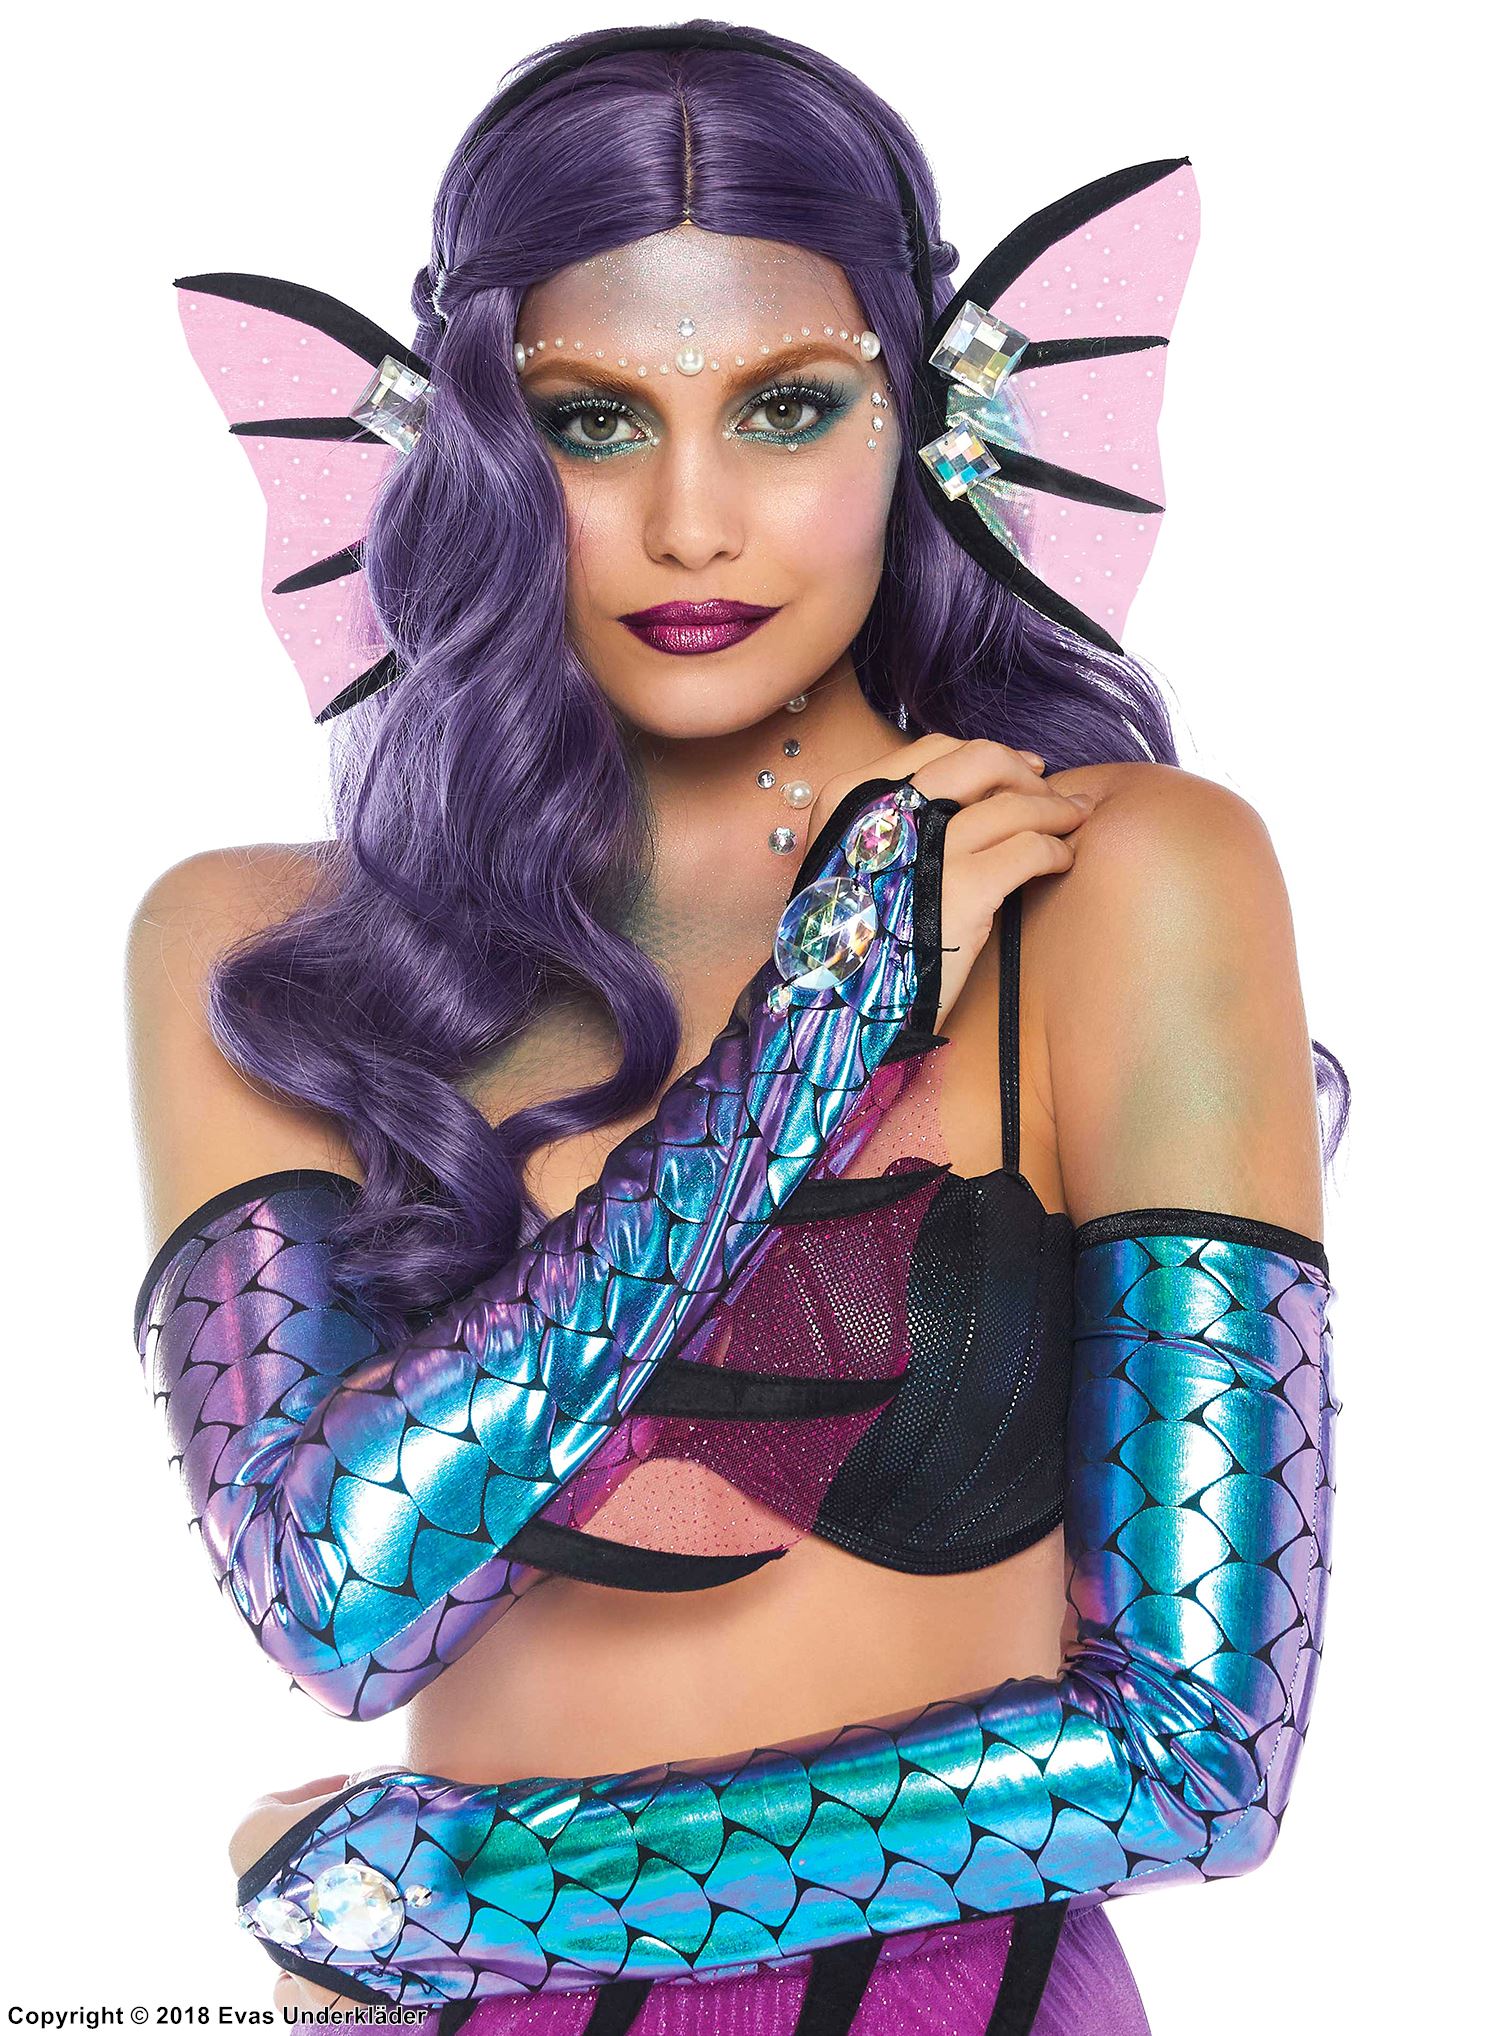 Siren, costume set, rhinestones, fish scales